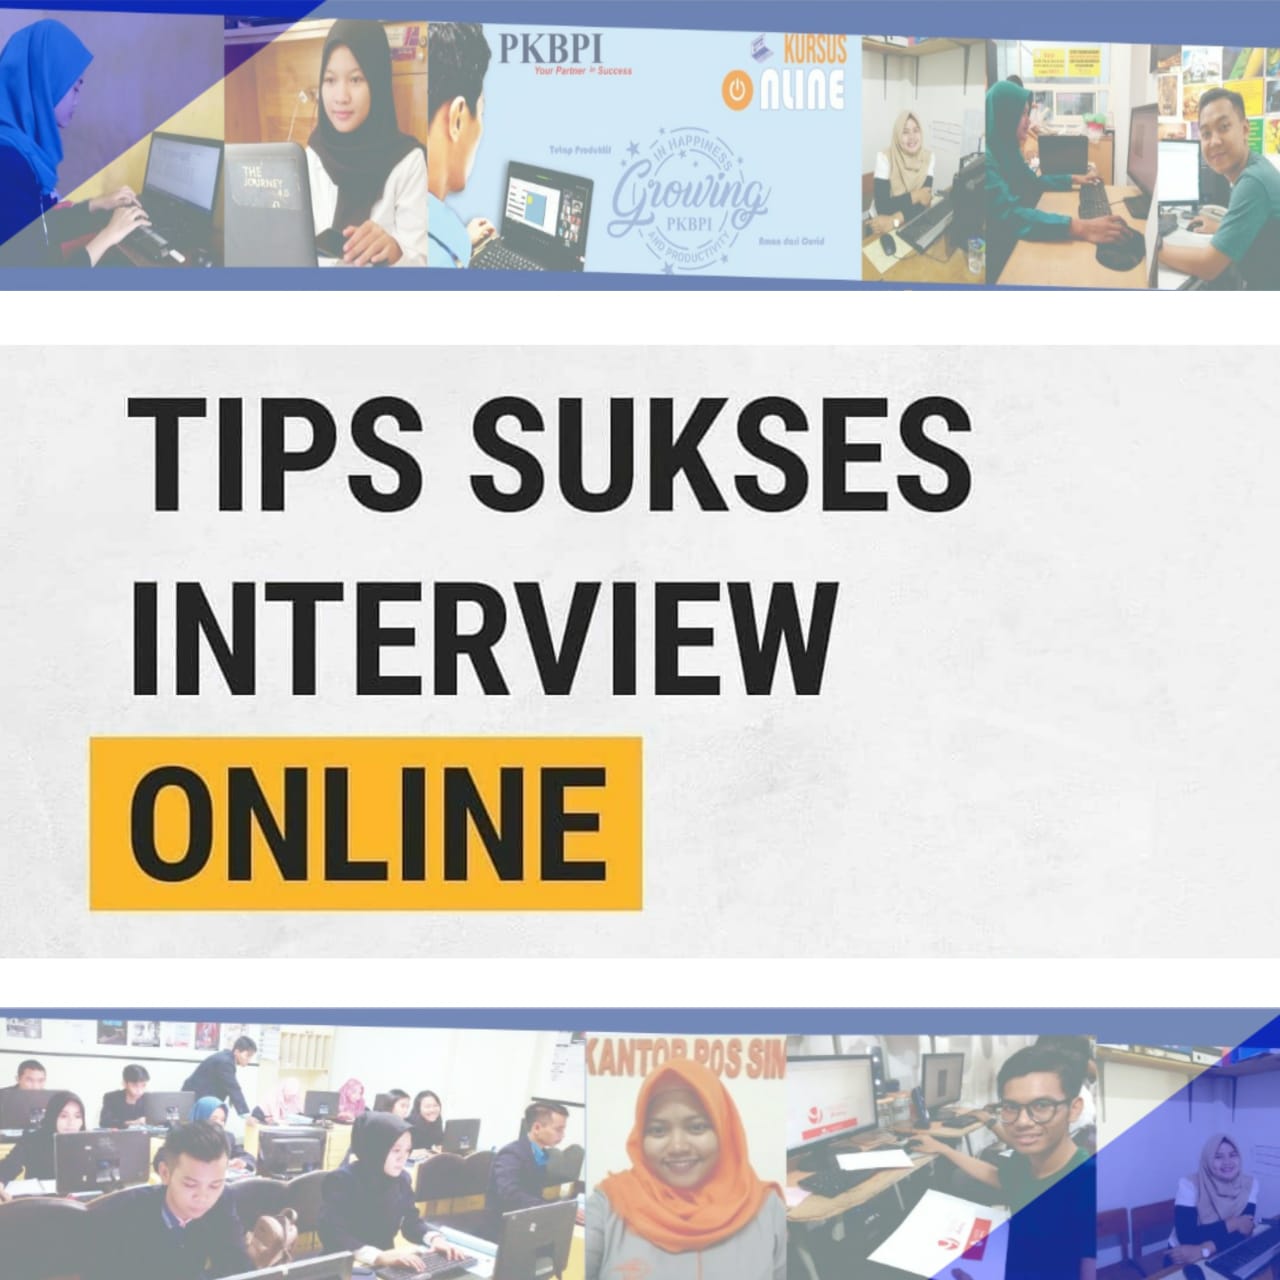 10 Tips Sukses Interview Online yang Harus Dipelajari - Kursus Komputer Online Surabaya - PKBPI